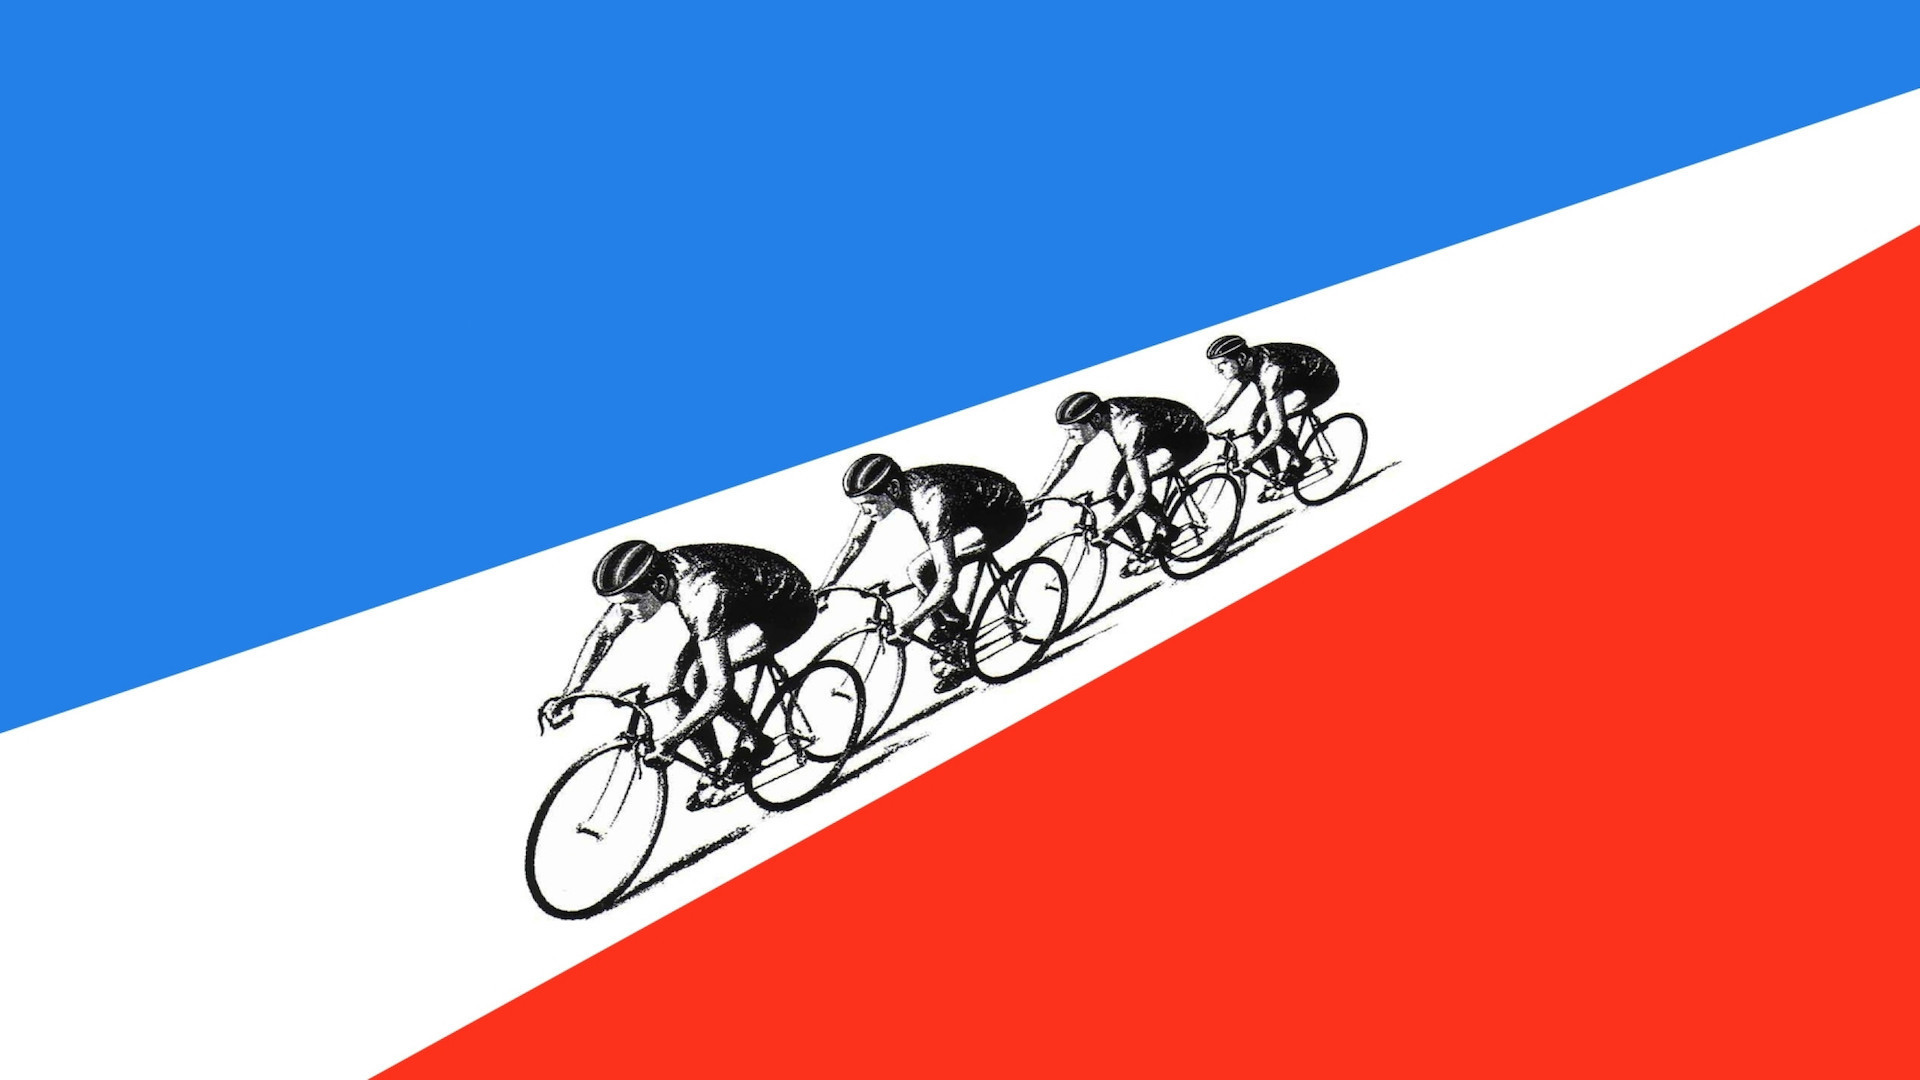 Sports Cycling 1920x1080